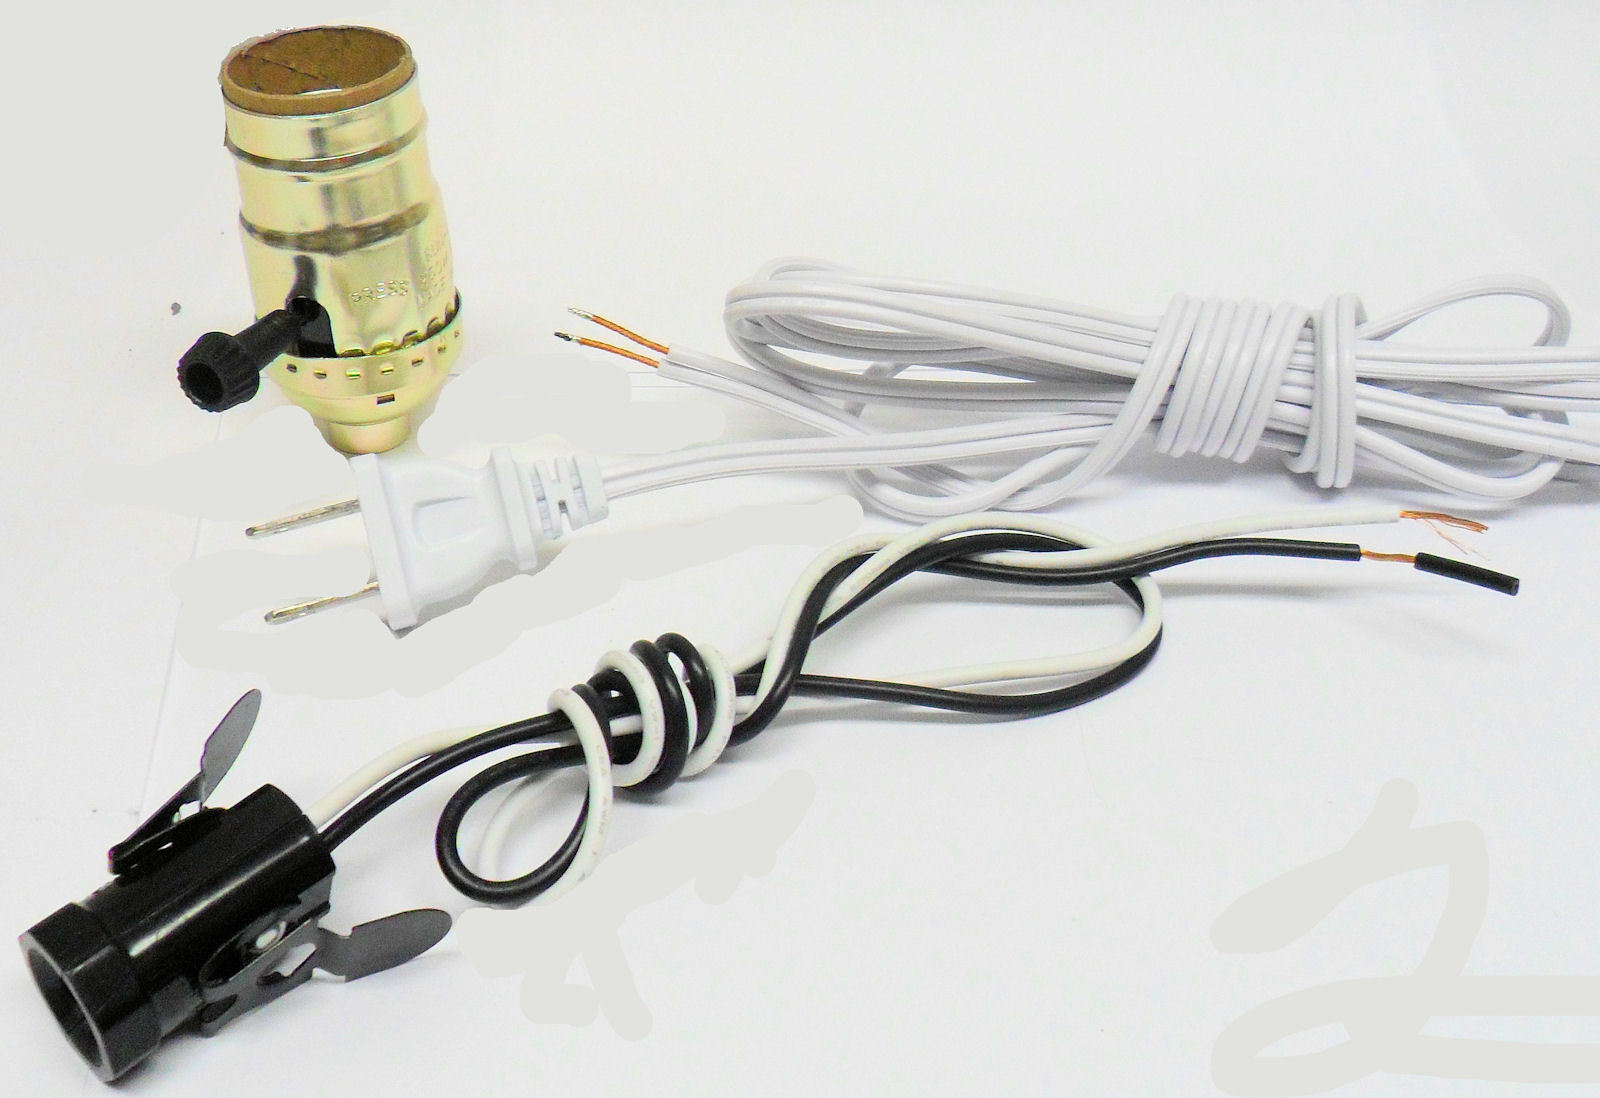 Nite-lite lamp part kit w/ 12' white cord, TR-209, TR-44